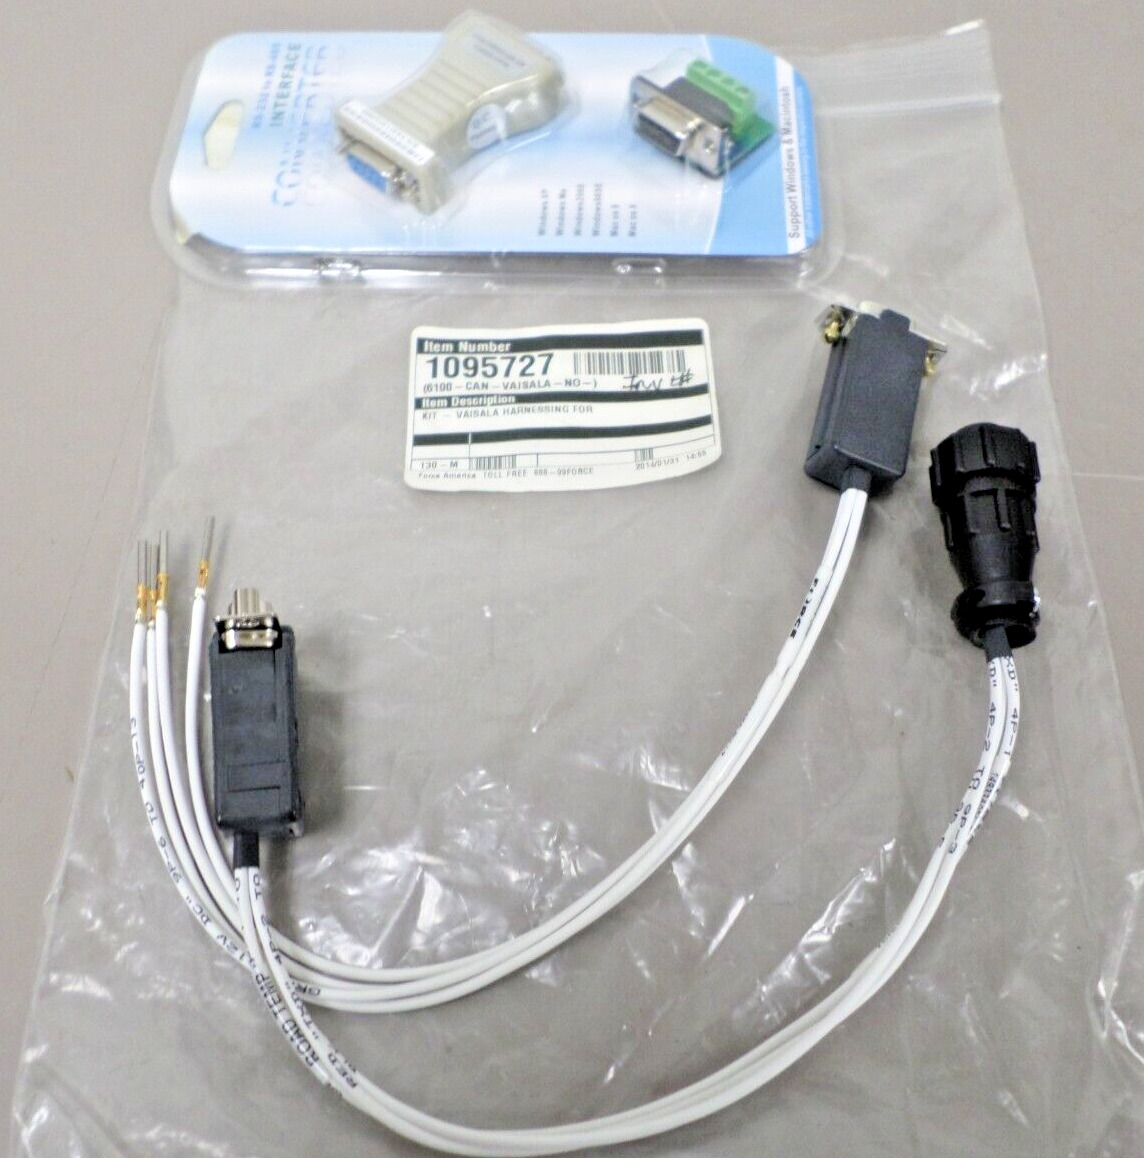 Force America / Vaisala 1095727 Harness Kit With 1095698 Interface Converter Kit